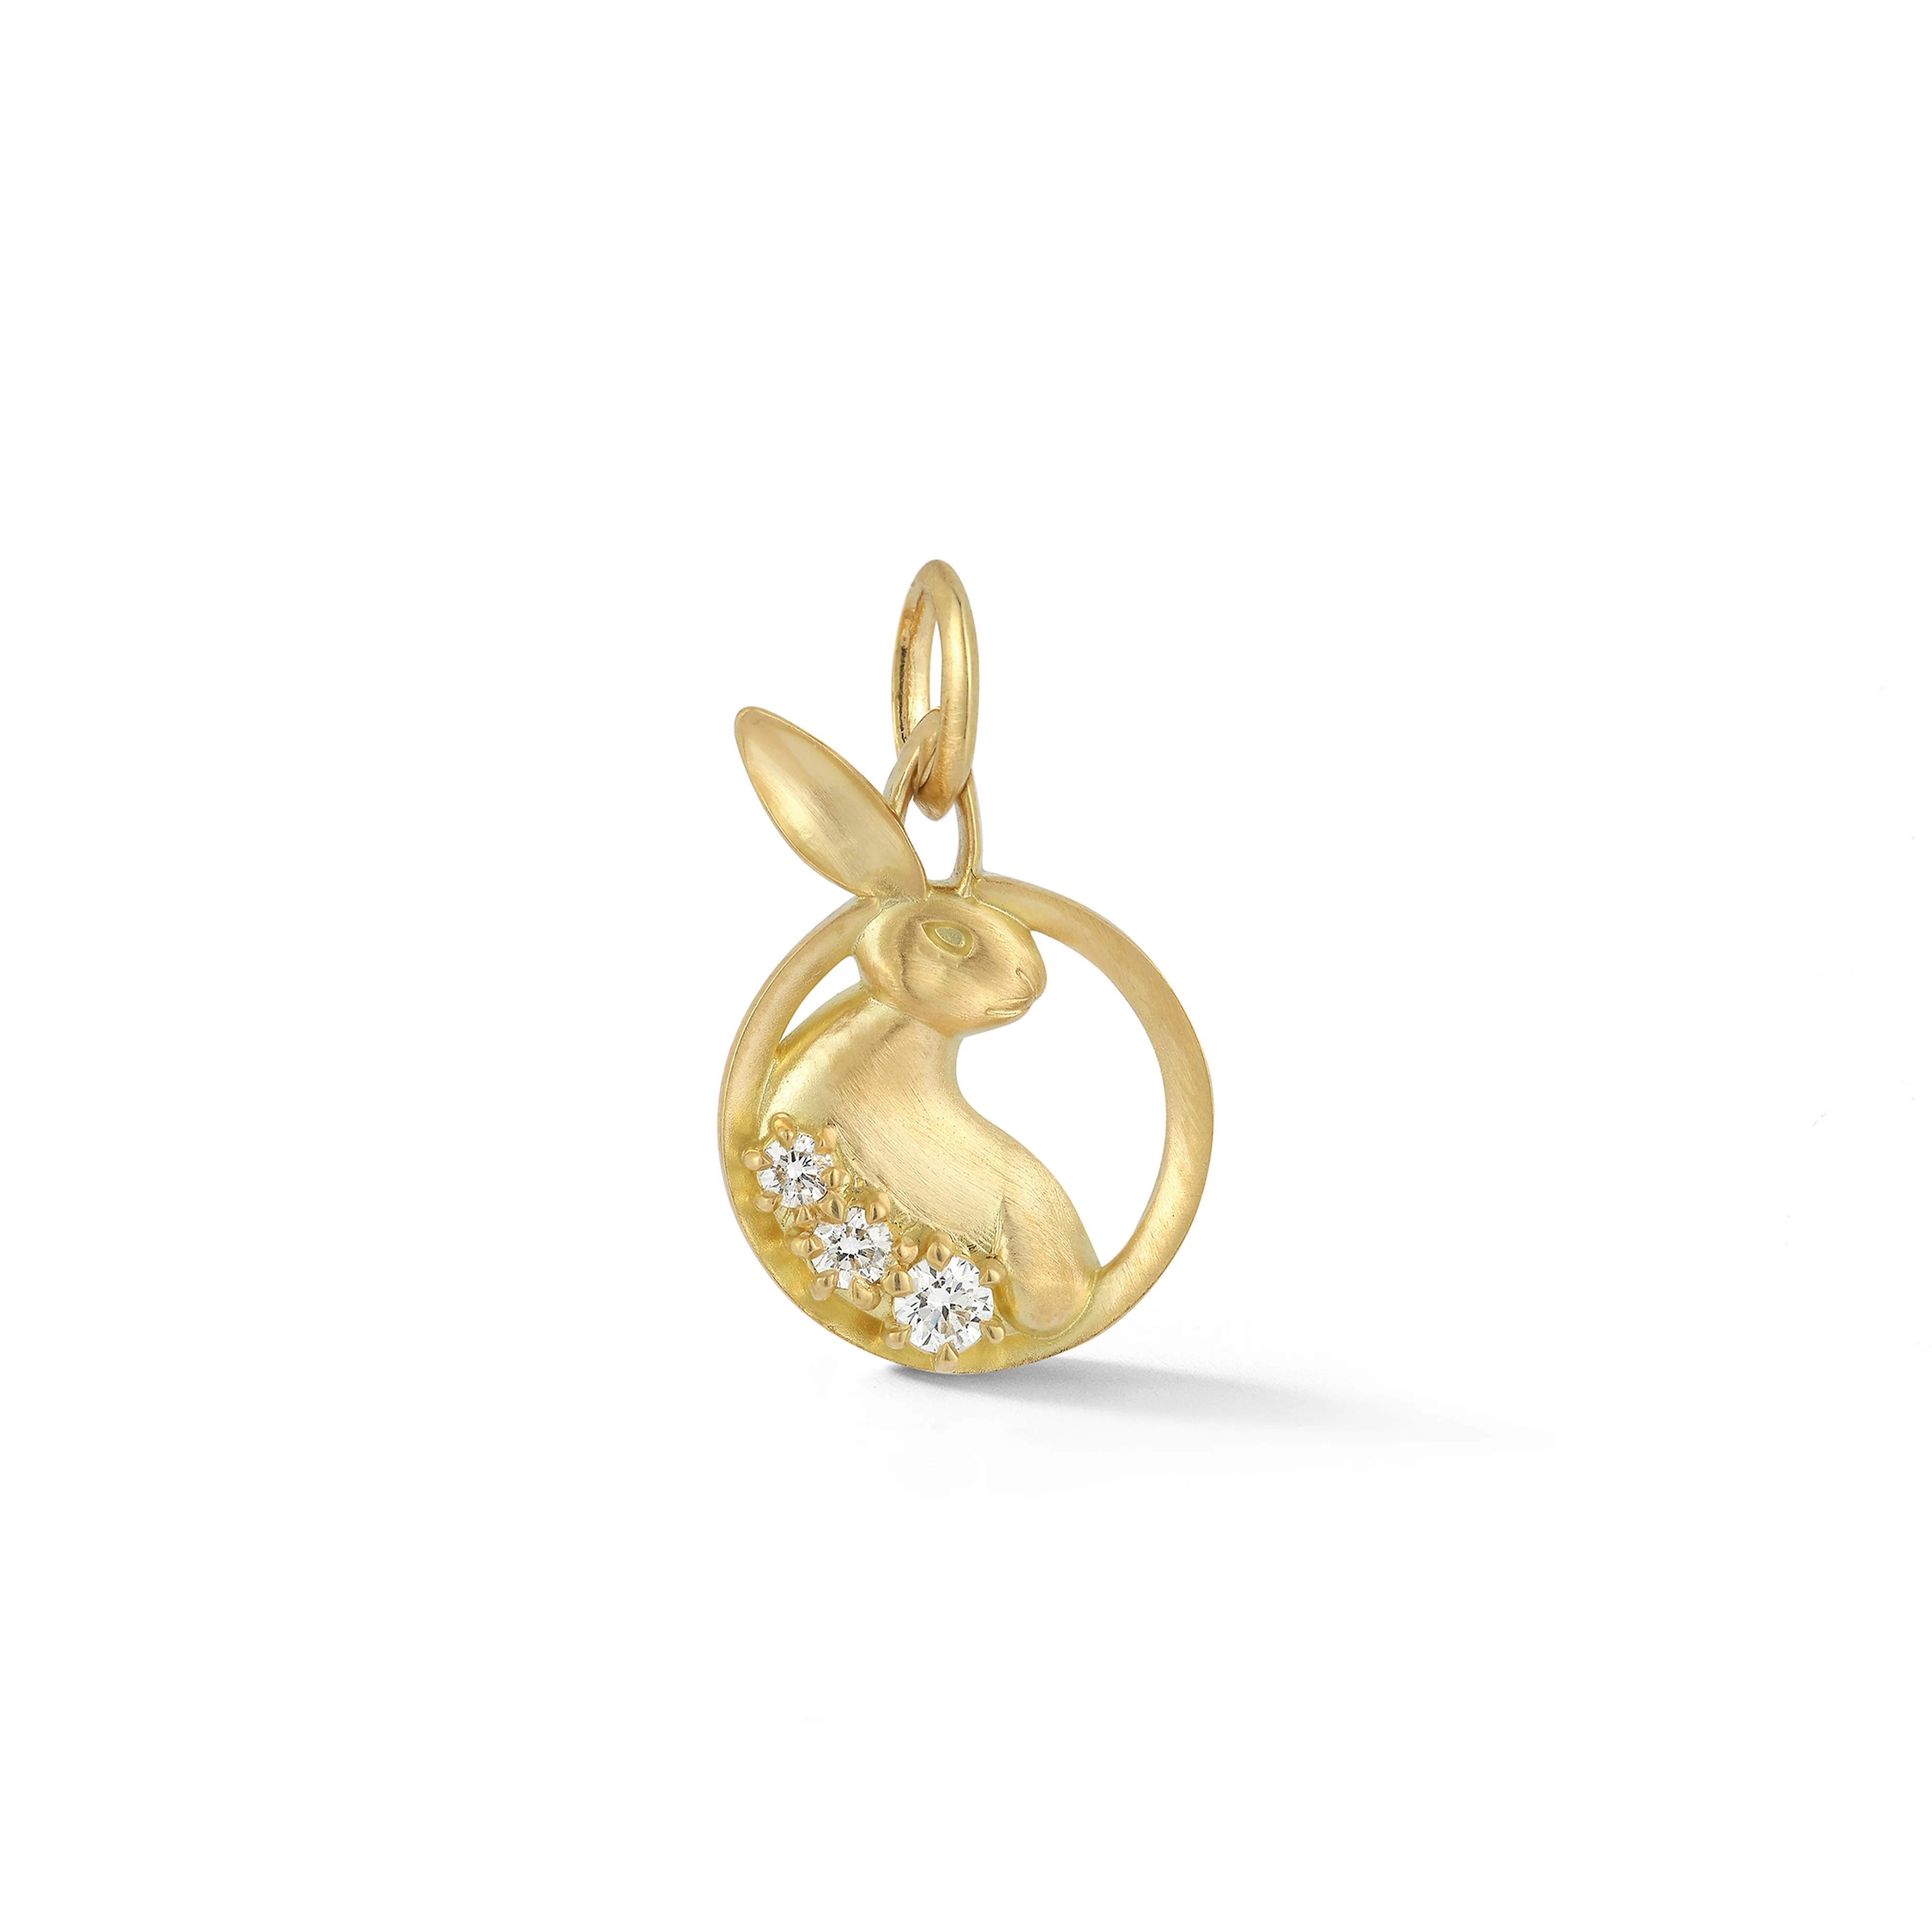 Jade Trau 18kt Yellow Gold Diamond Rabbit Pendant / Charm 3rd=0.16ctw Fg/vs2-si1 (no Chain)